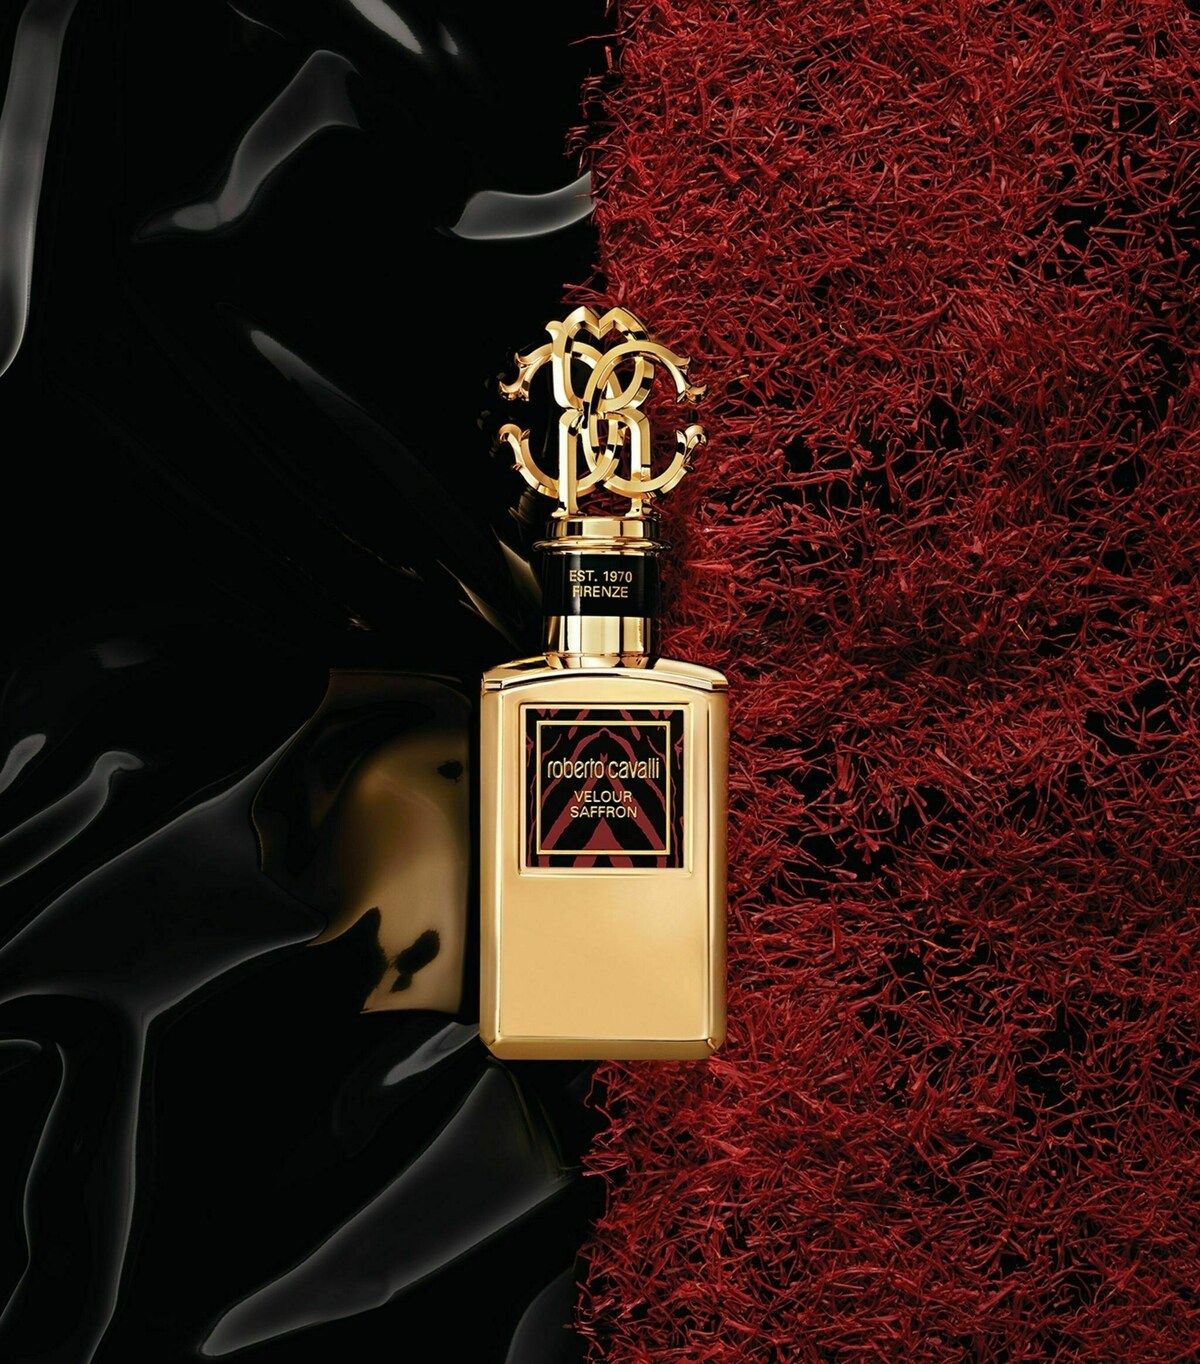 Velour Saffron Roberto Cavalli perfume - a fragrance for women and men 2021